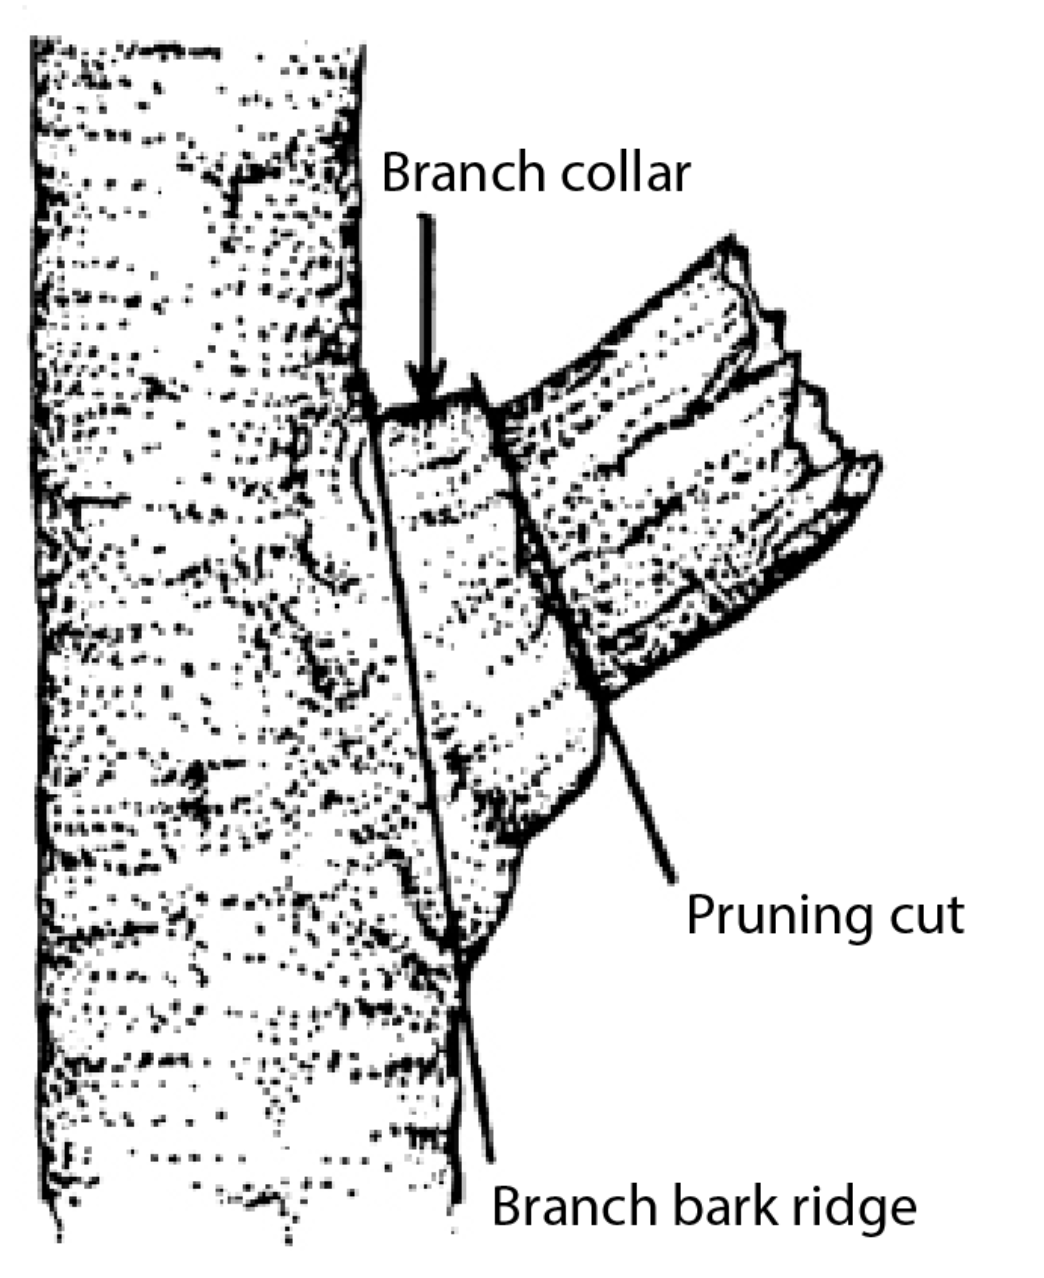 branch collar, pruning cut, branch bark ridge